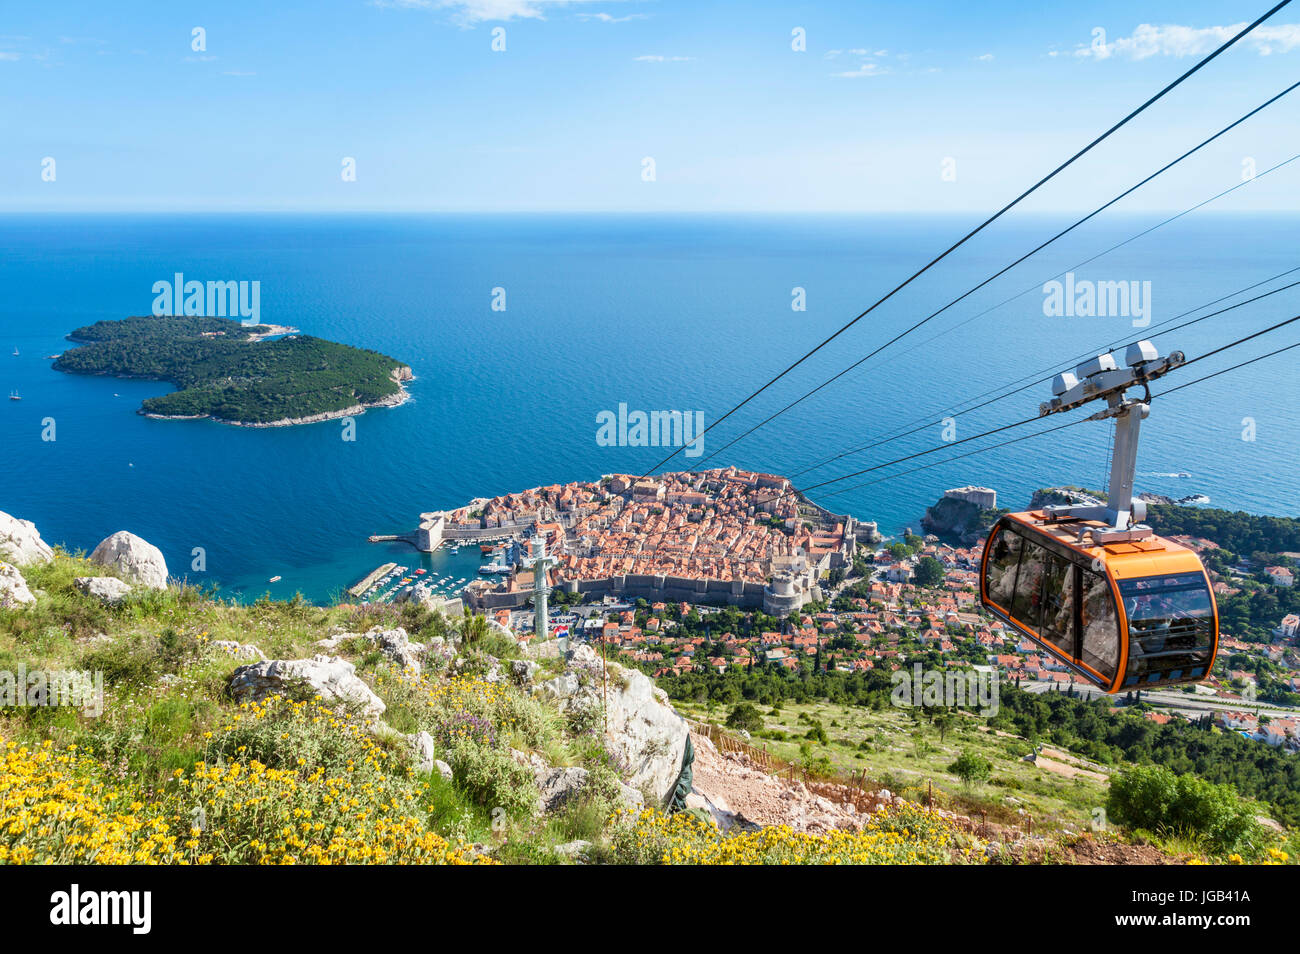 Dubrovnik Croacia costa dálmata dubrovnik teleférico hasta el Monte Srd Dubrovnik casco antiguo vista aérea de la isla de Lokrum Dubrovnik, Croacia Europa Foto de stock